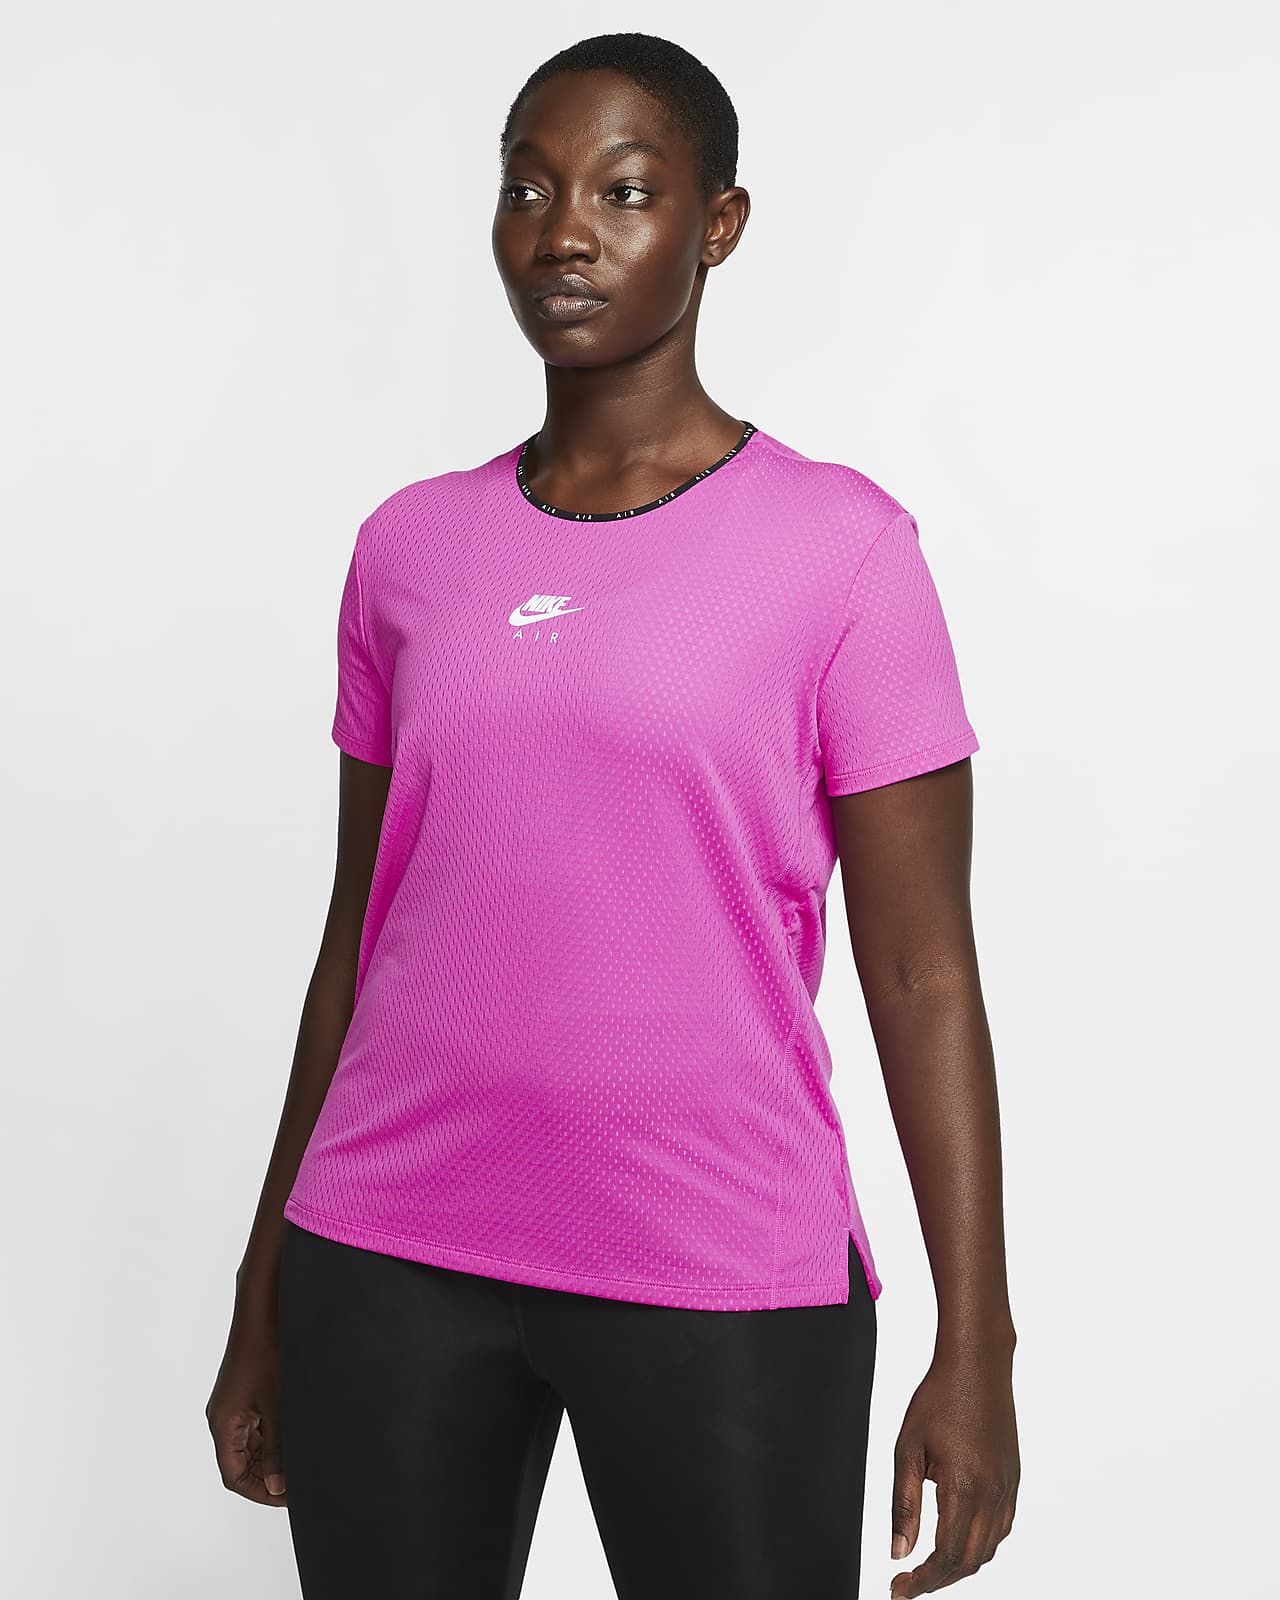 Short-Sleeve Running Top. Nike LU